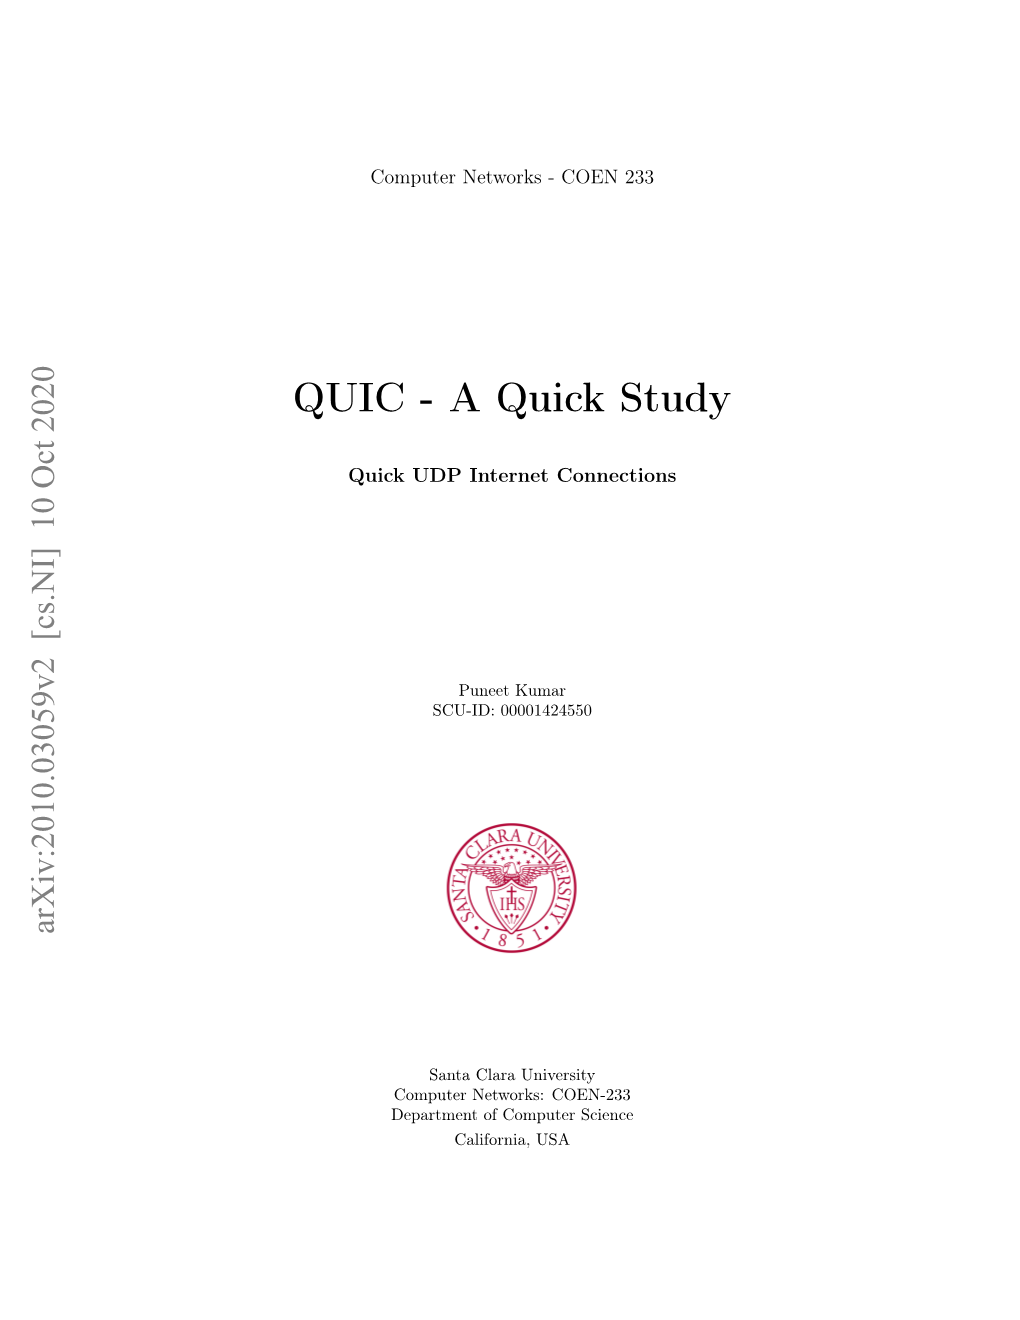 QUIC - a Quick Study